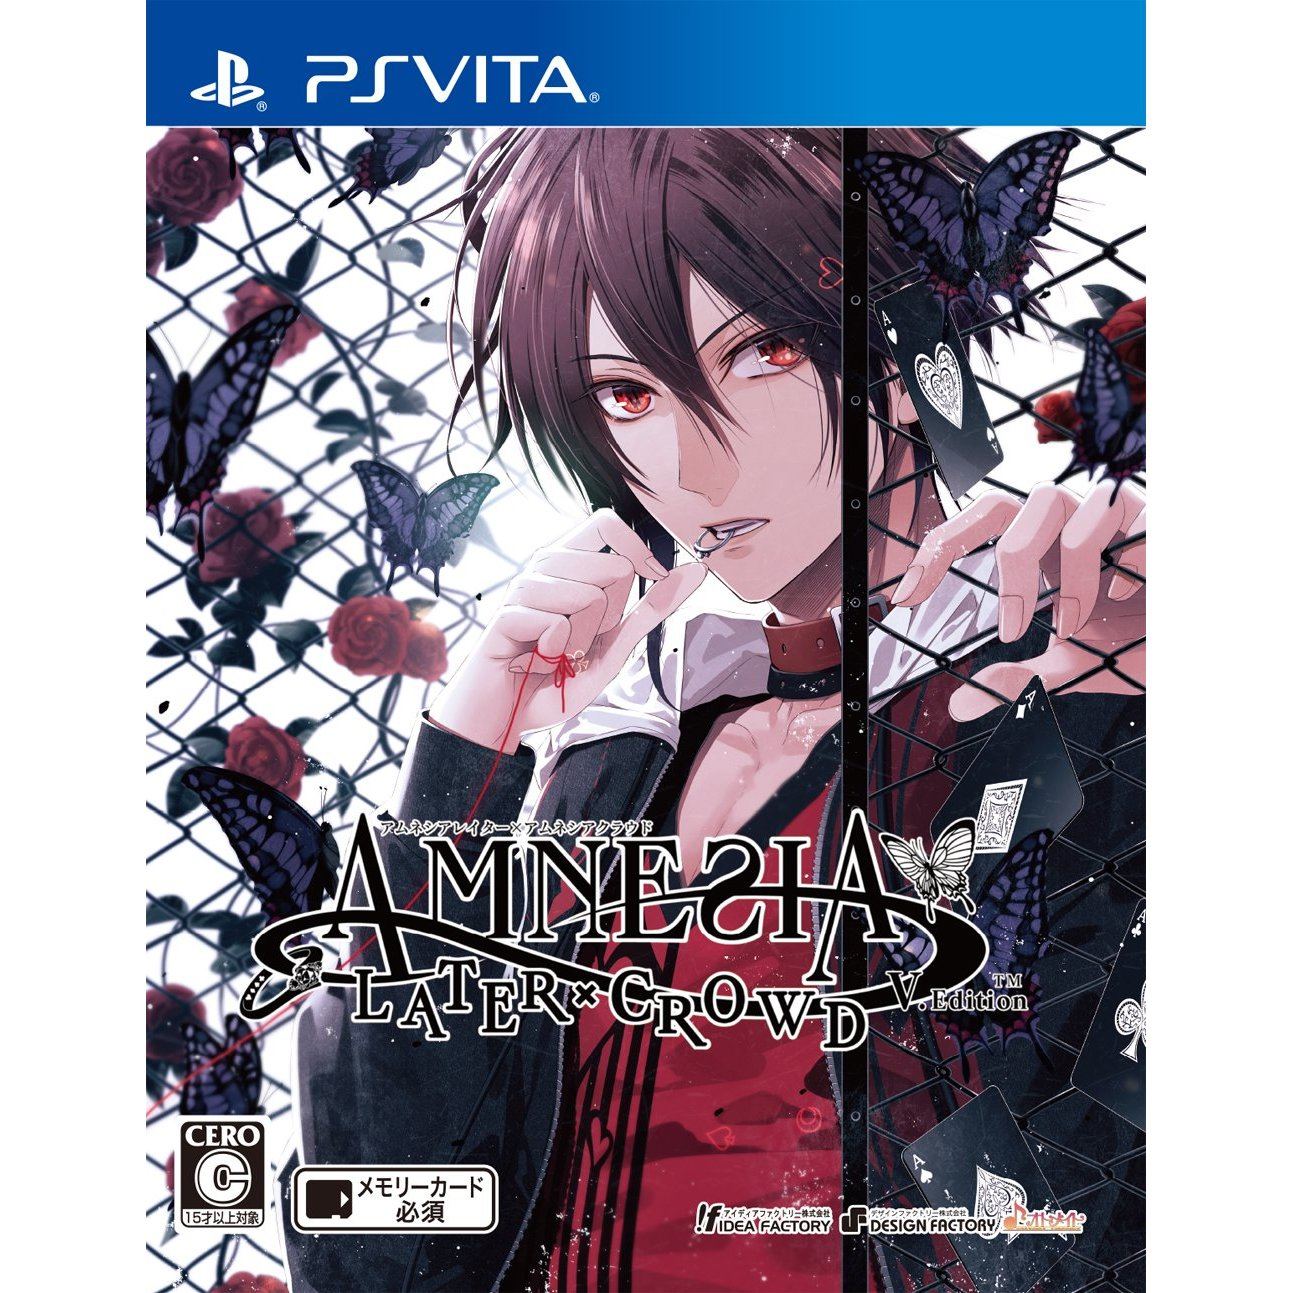 Buy Amnesia World Later X Crowd V Edition for PlayStation Vita